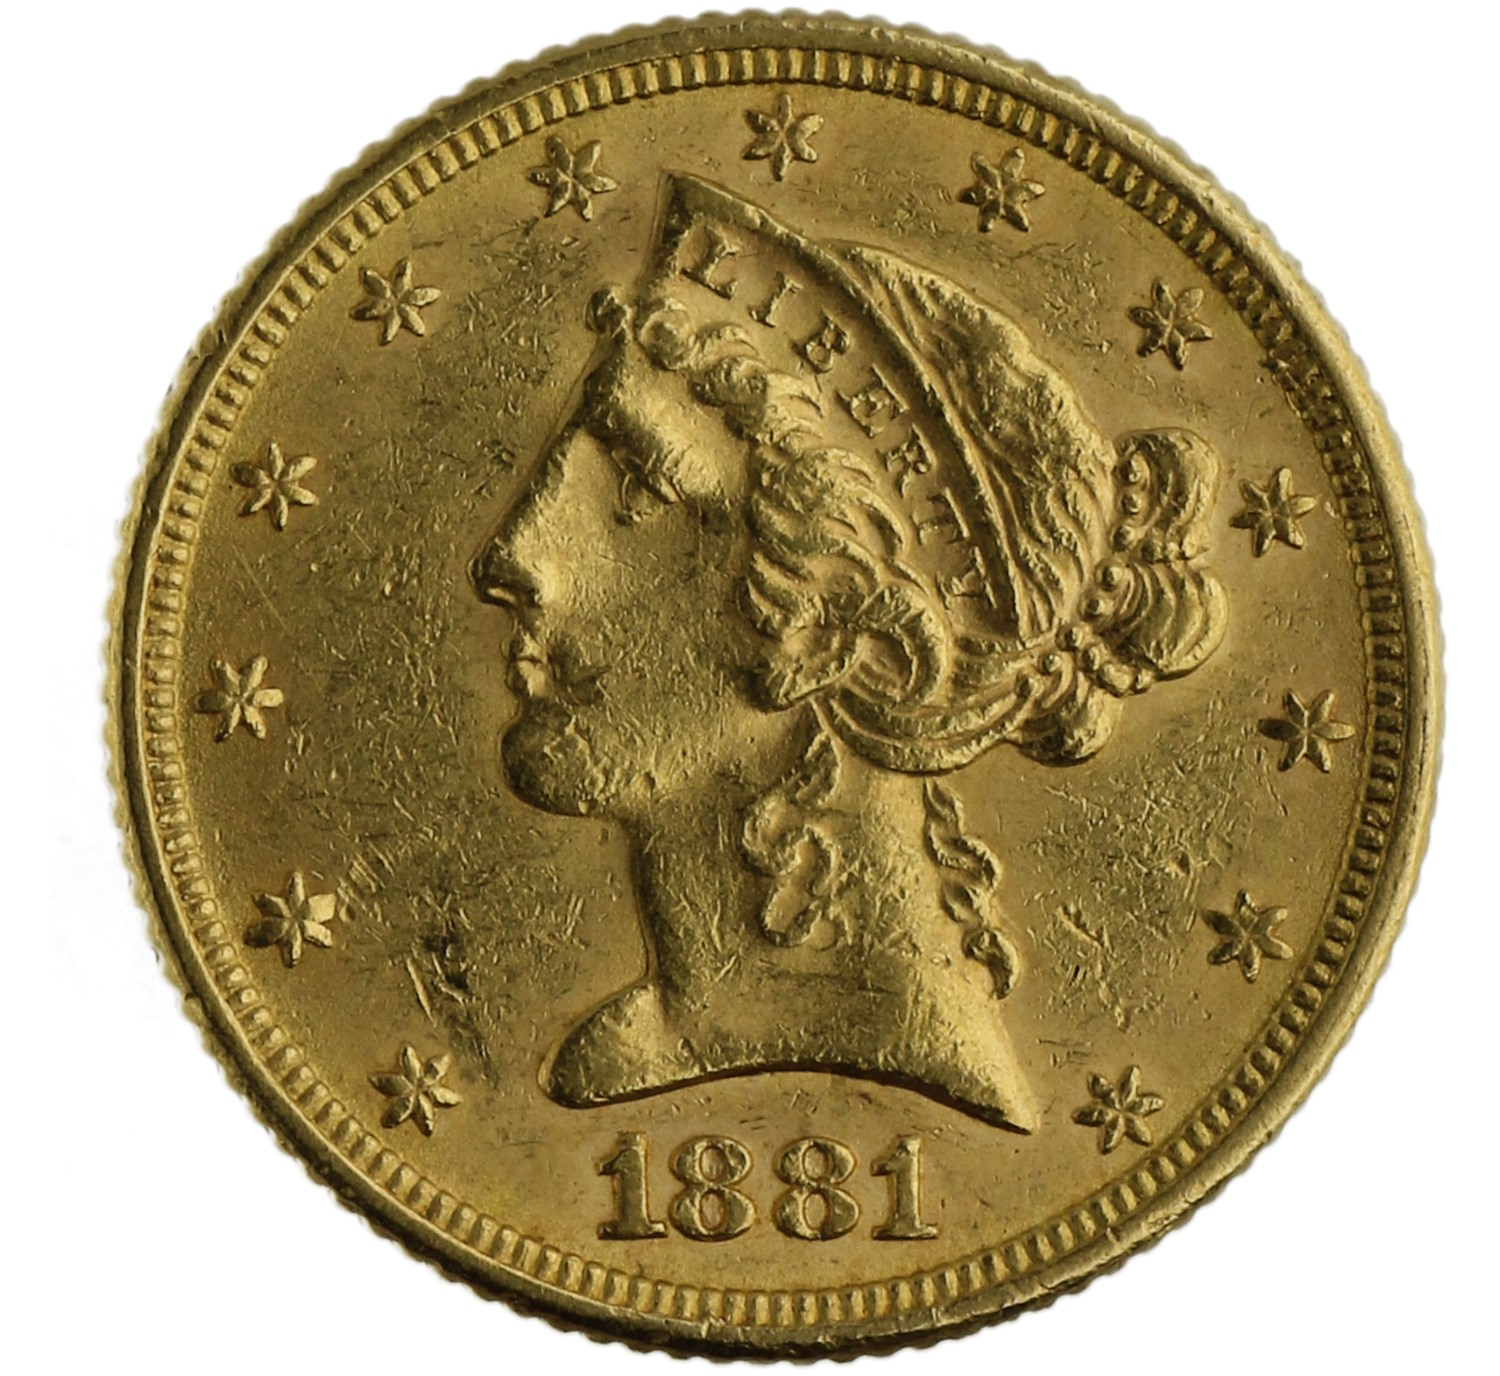 5 Dollars - USA - 1881